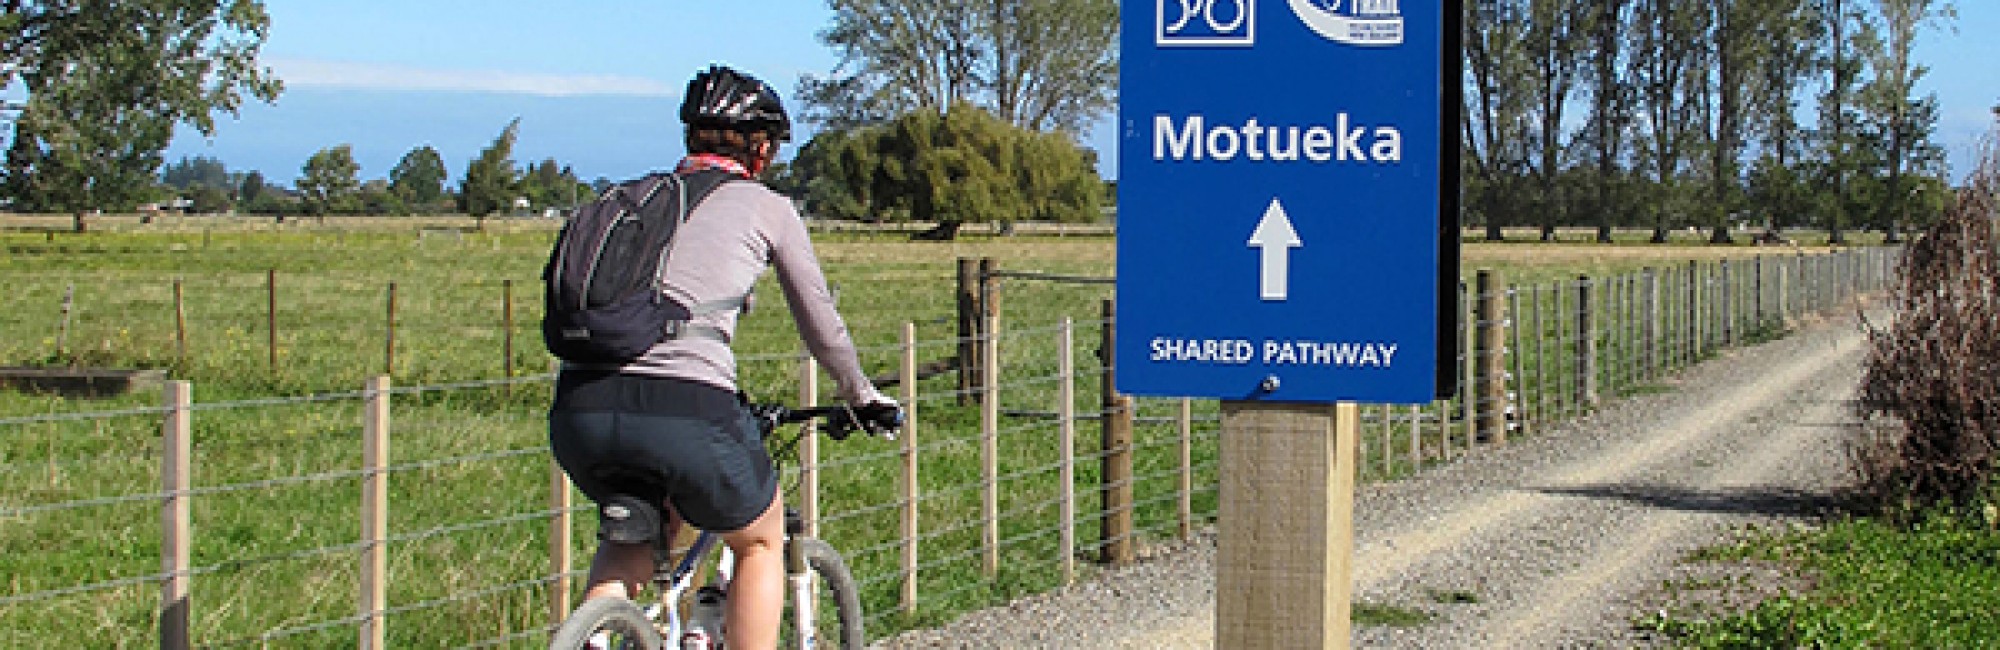 Bike Etiquette TGTT Shared Pathway Sign credit bennettandslater.co.nz landing